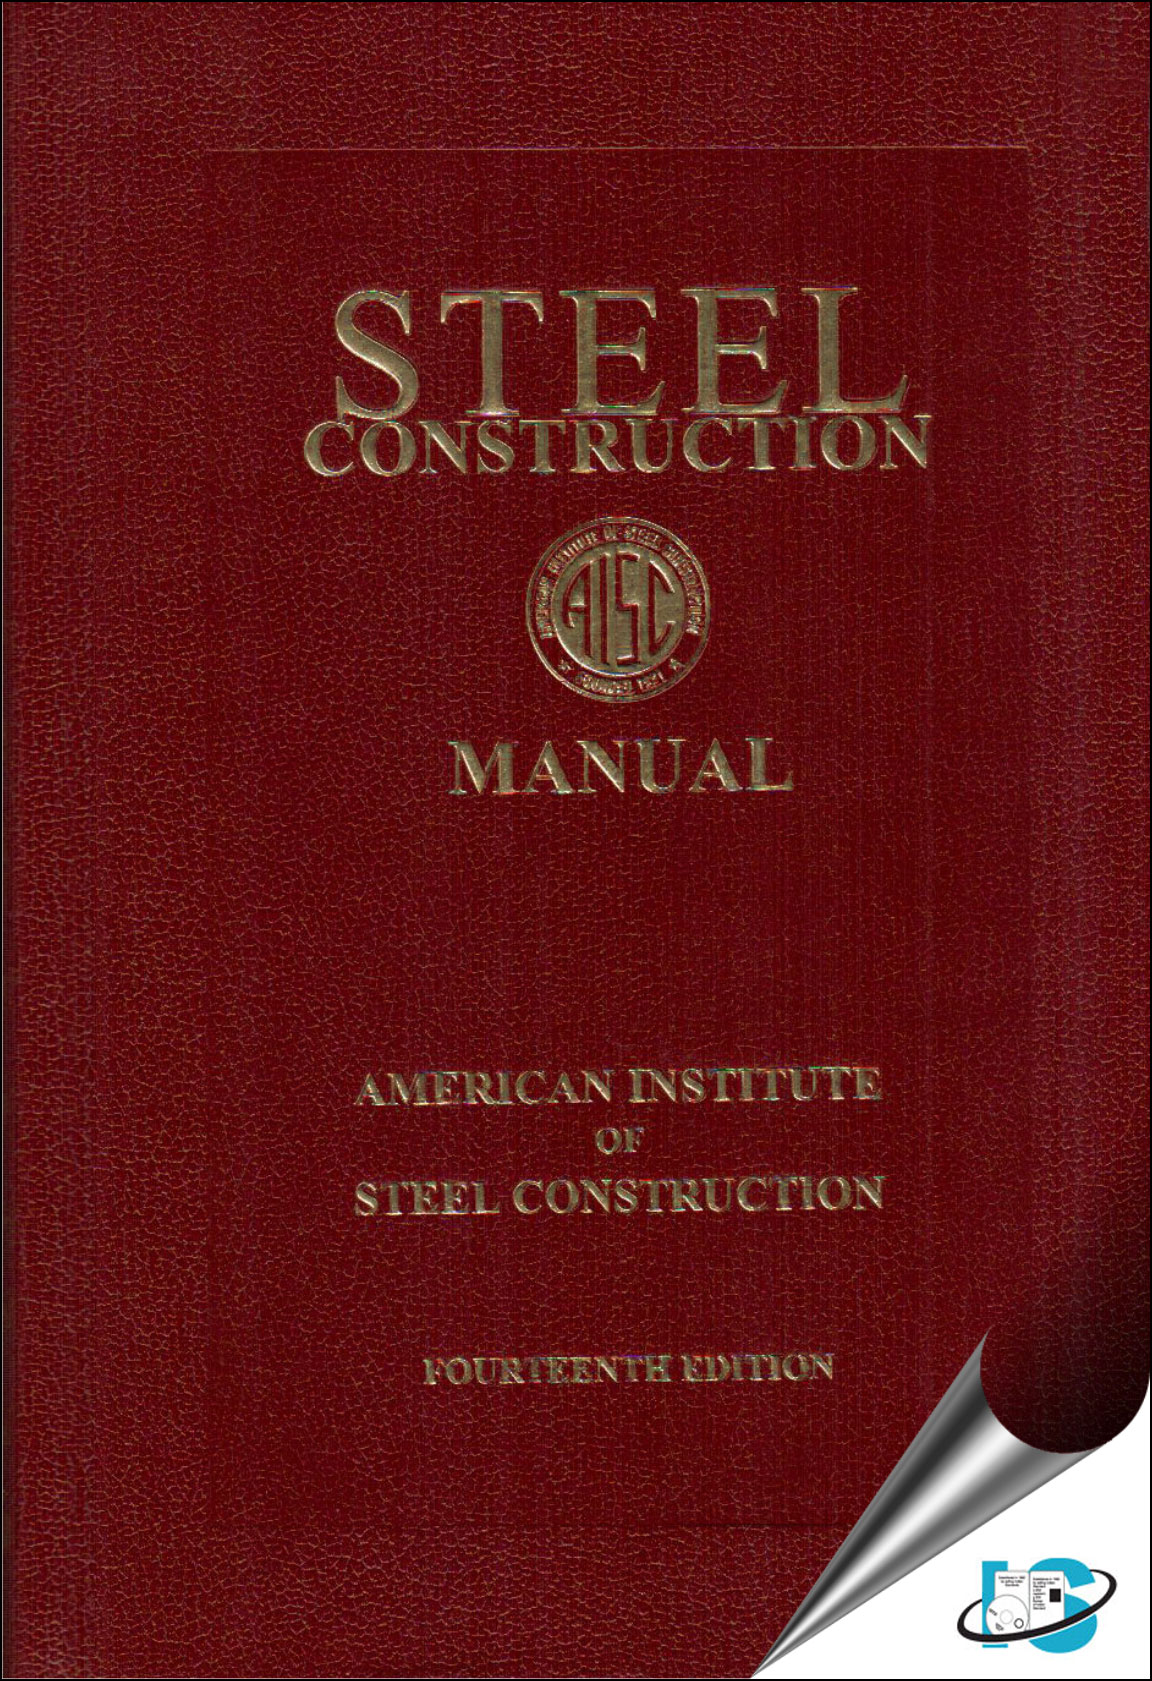 steel construction manual 15th edition pdf